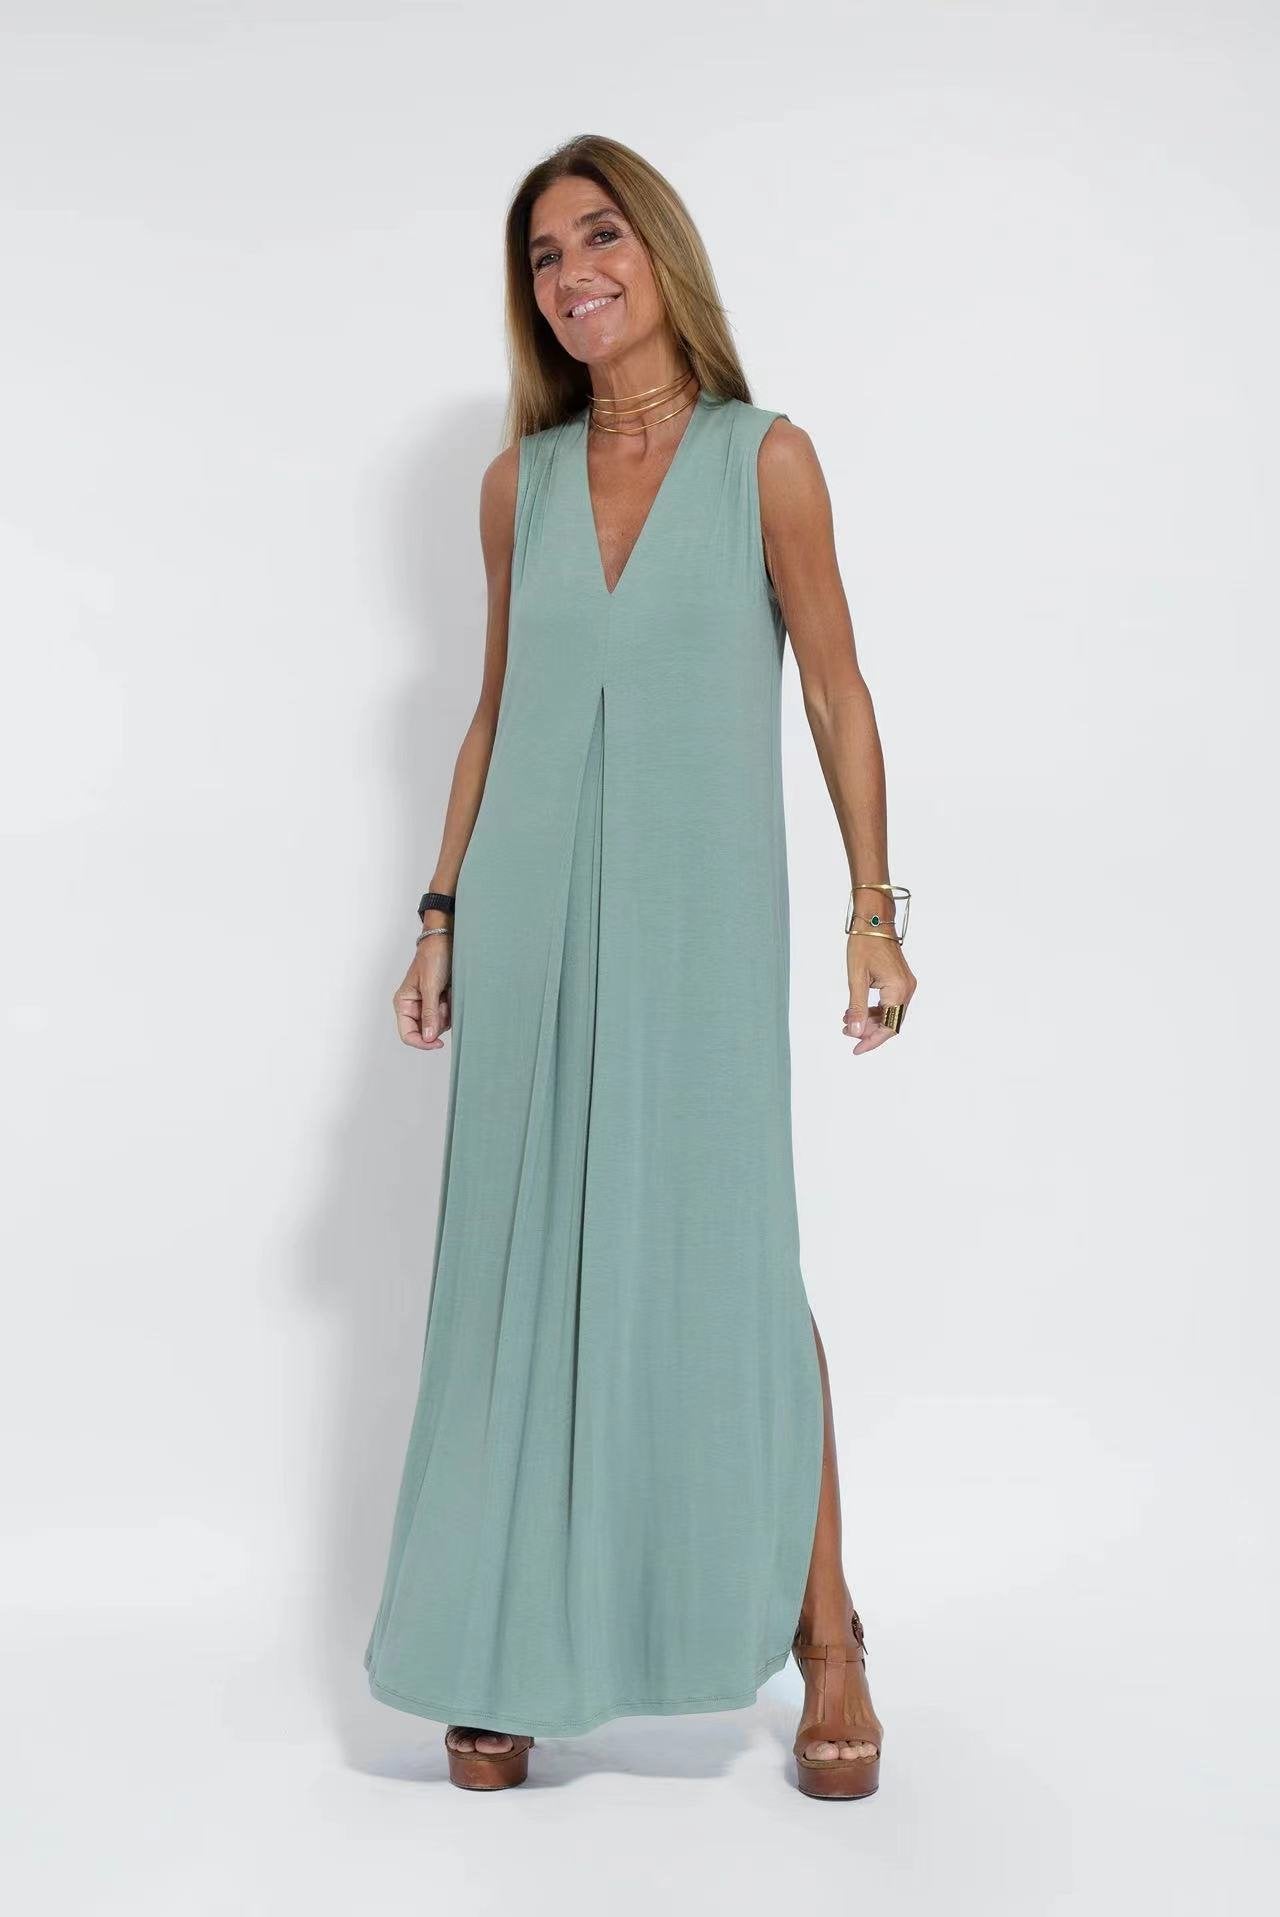 SleekSiren Elegant Solid Color Sleeveless Maxi Dress